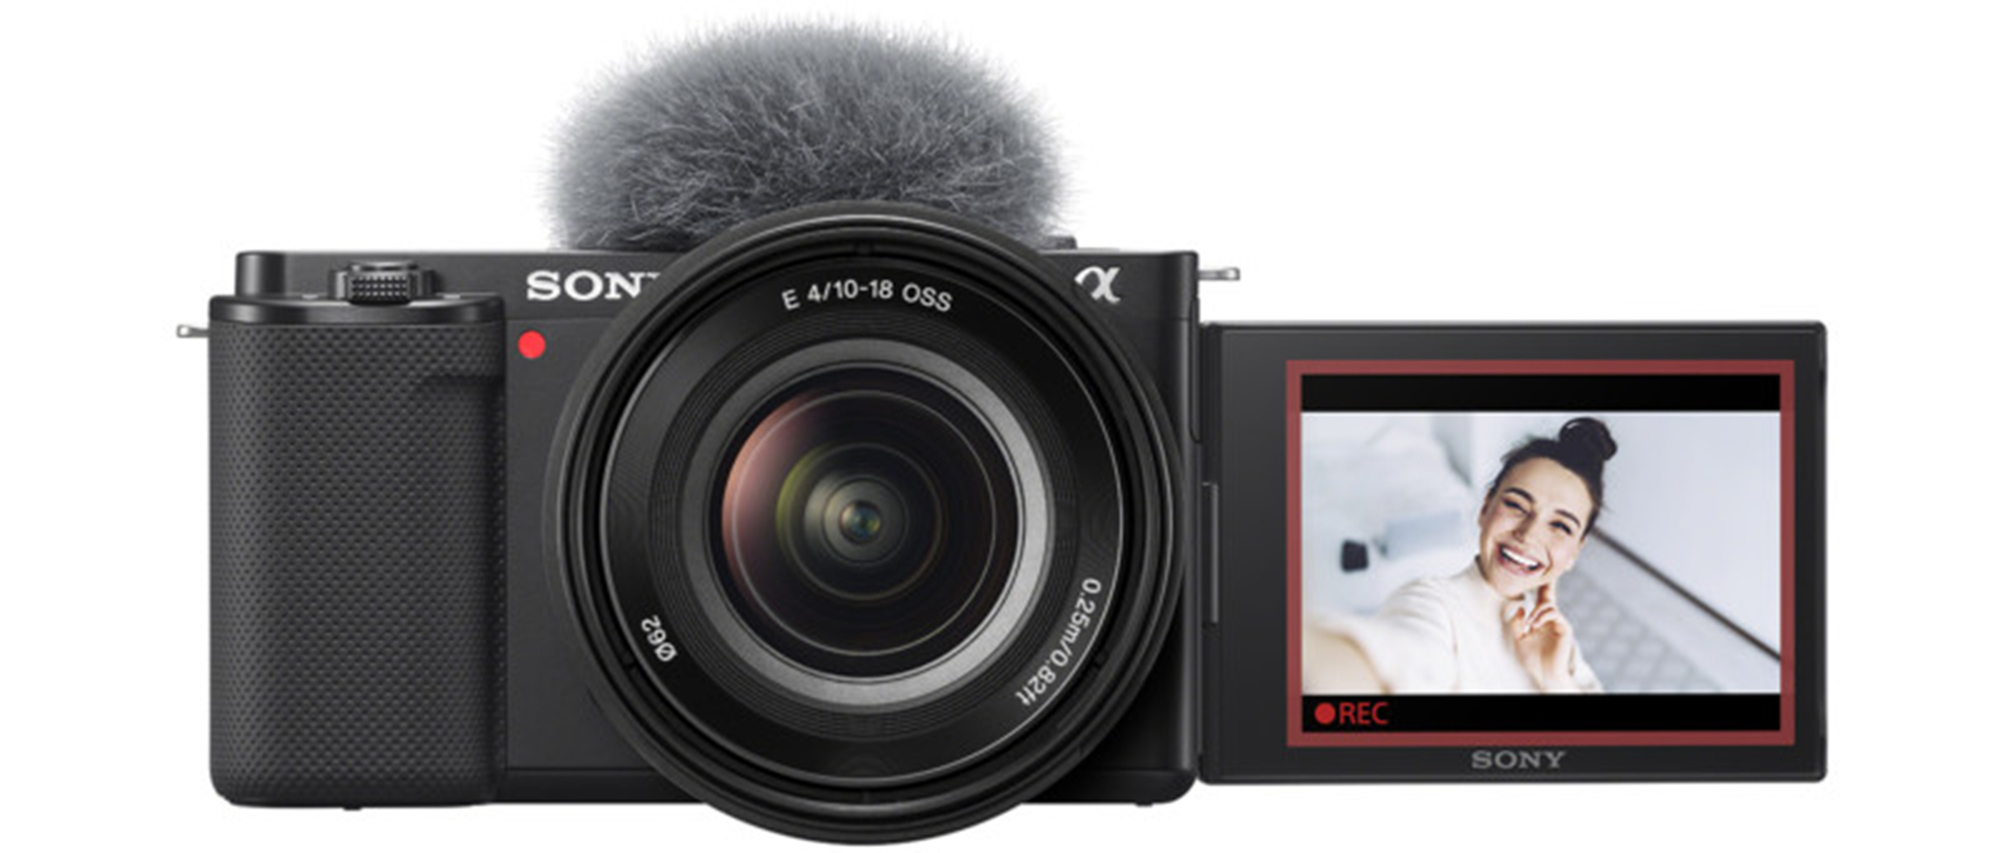 Sony camera for vlogging